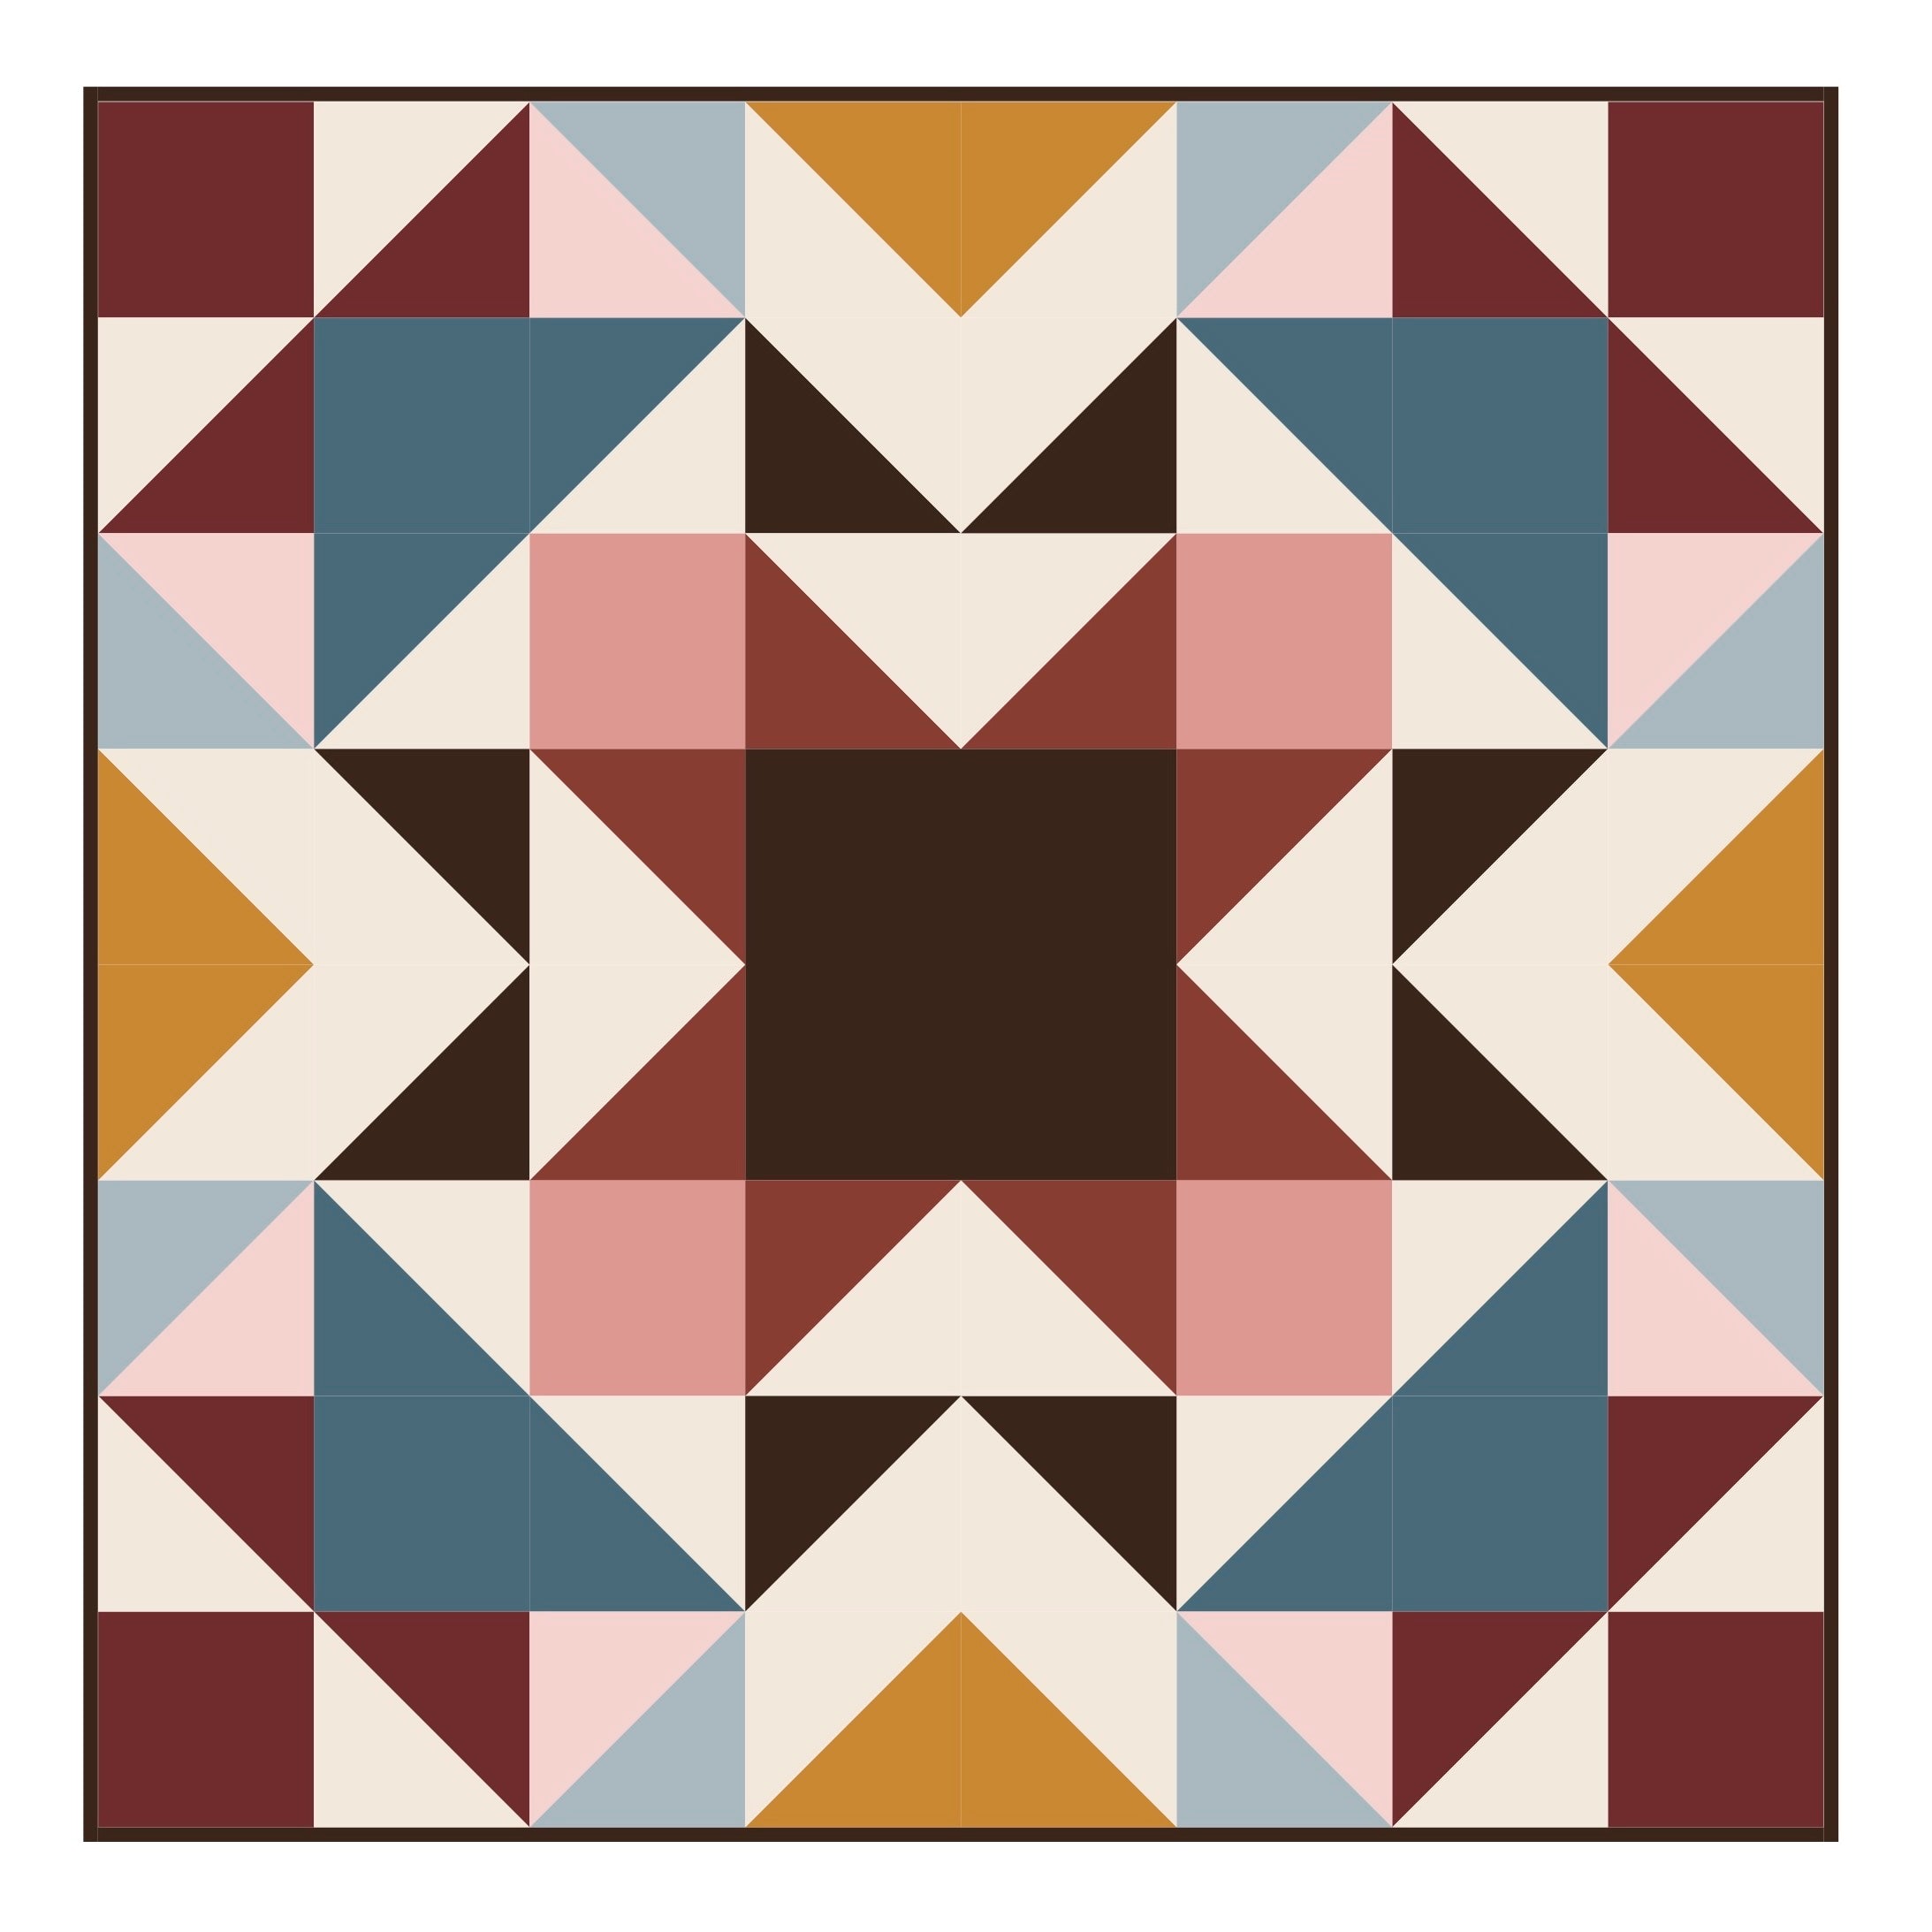 Rosalina - Quilt Pattern - PDF